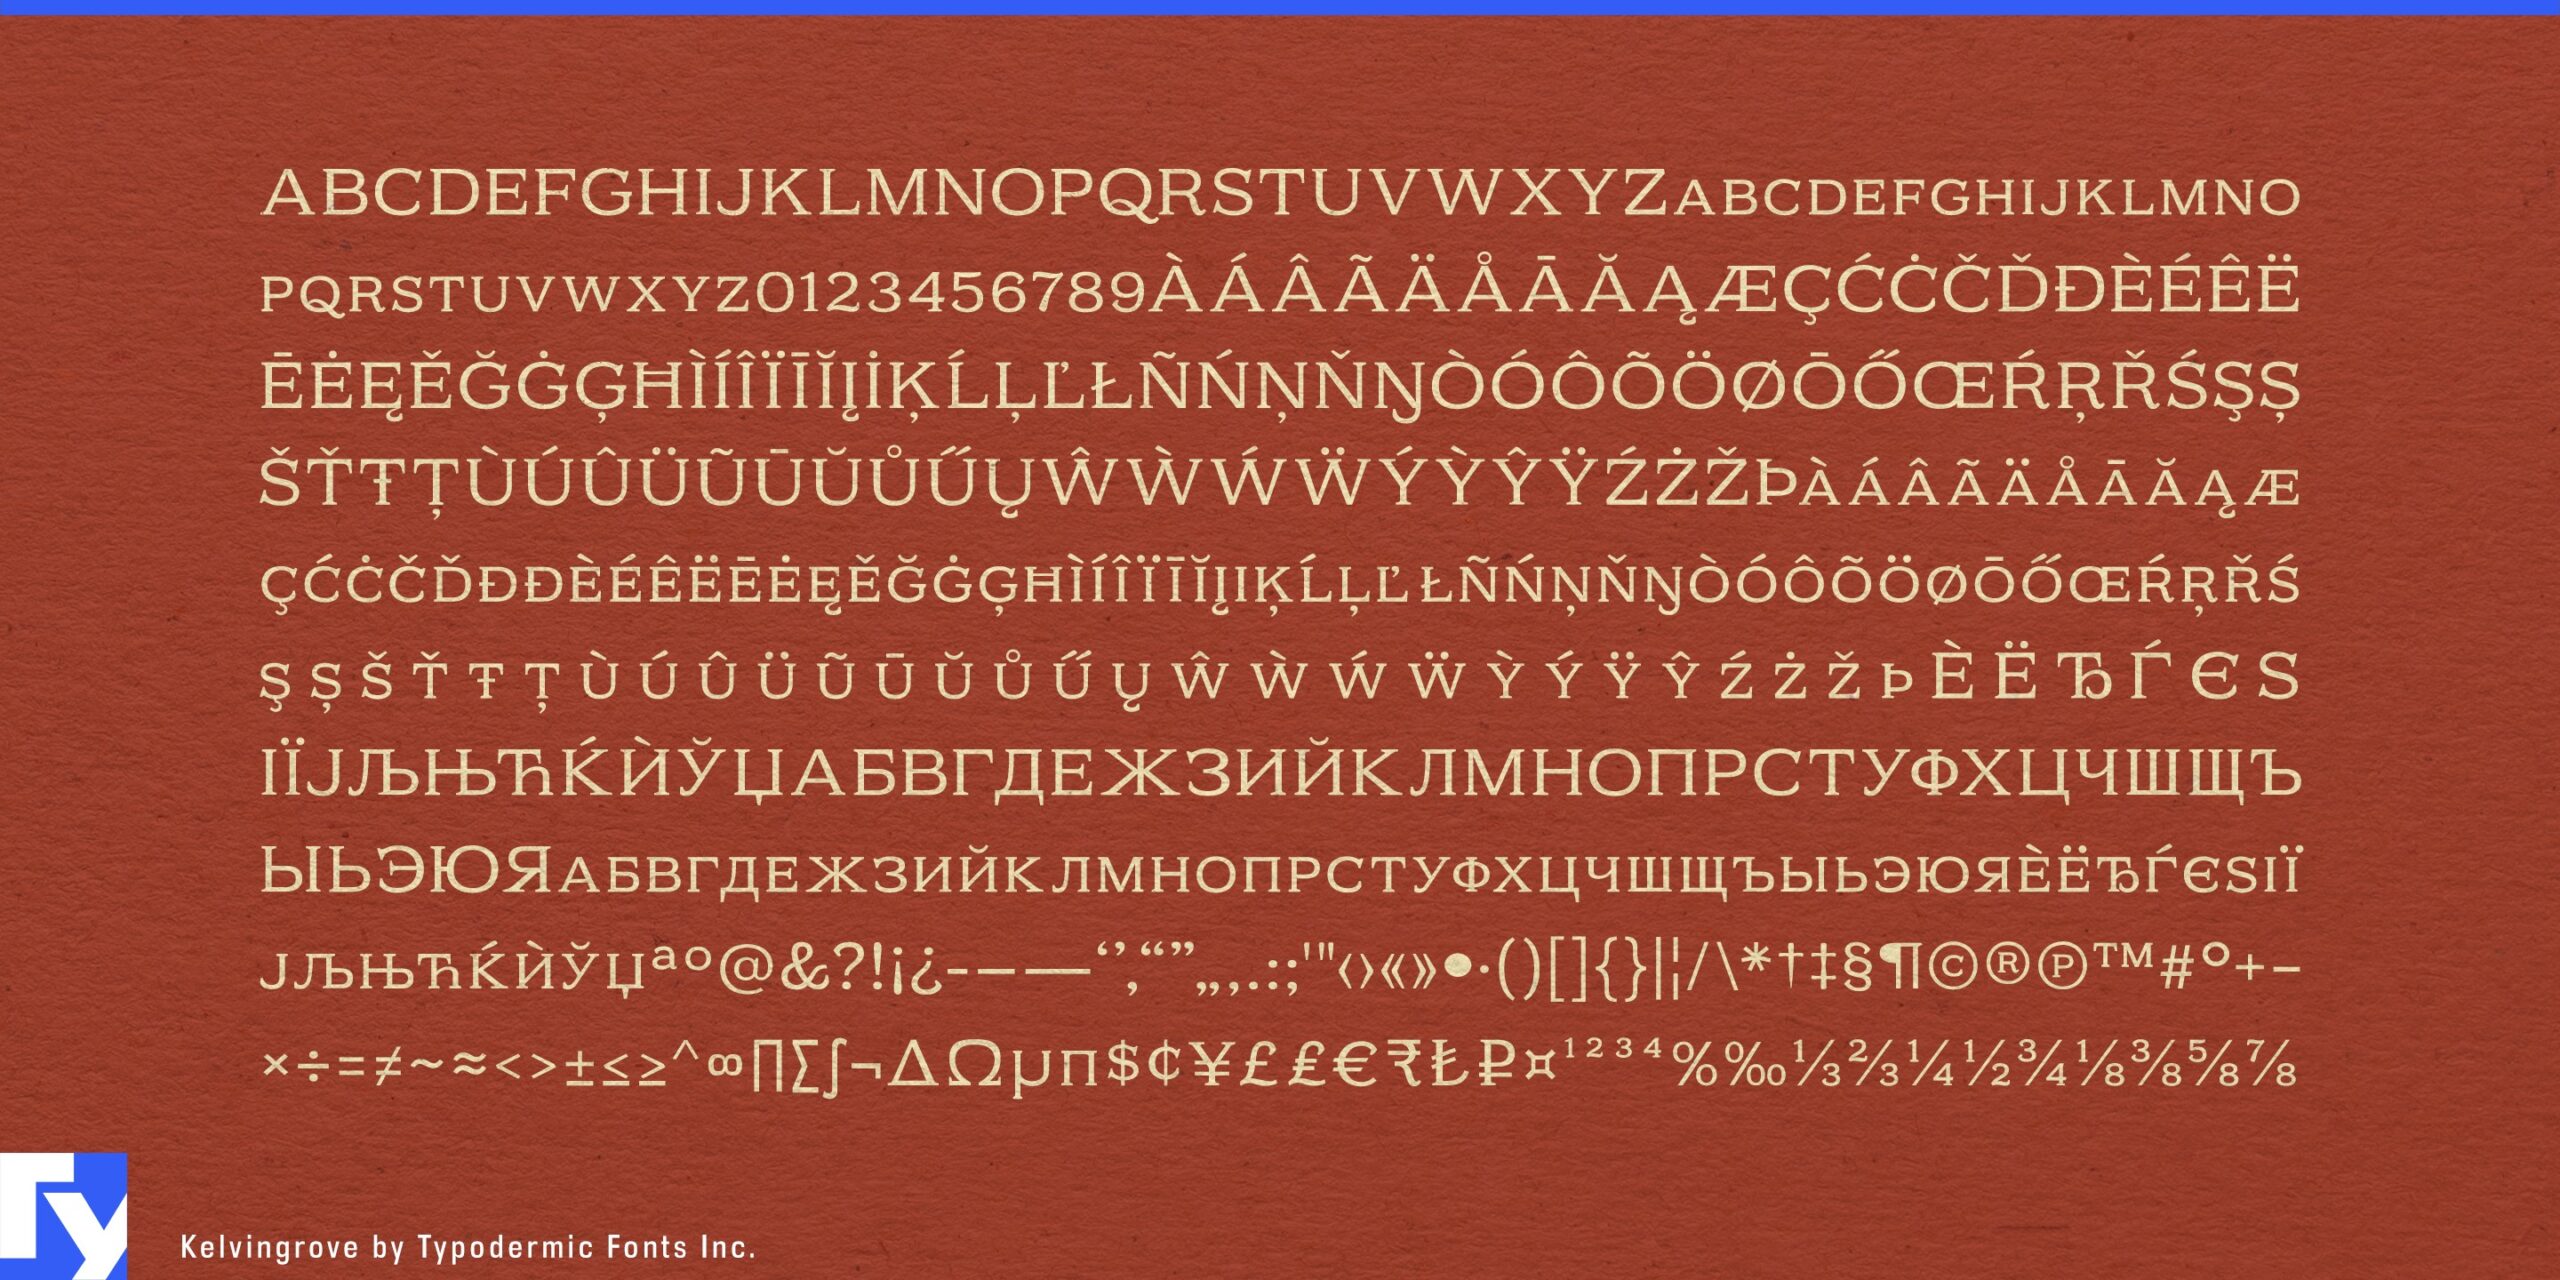 Legible Slab Serif: Kelvingrove Typeface in Action